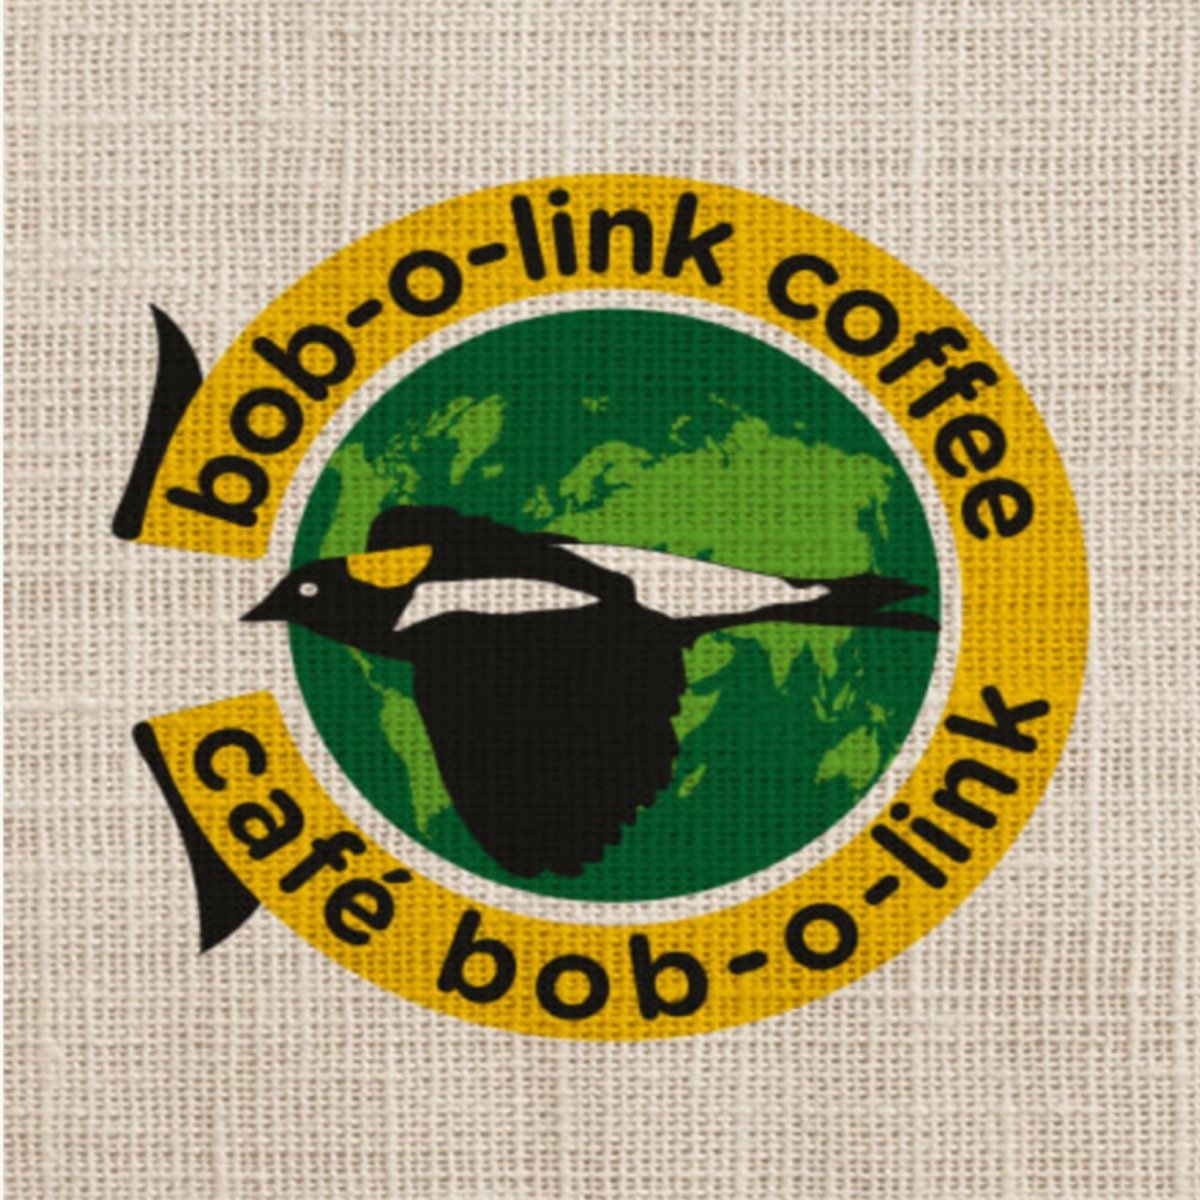 Bob o link. Brasil - Artisancoffee